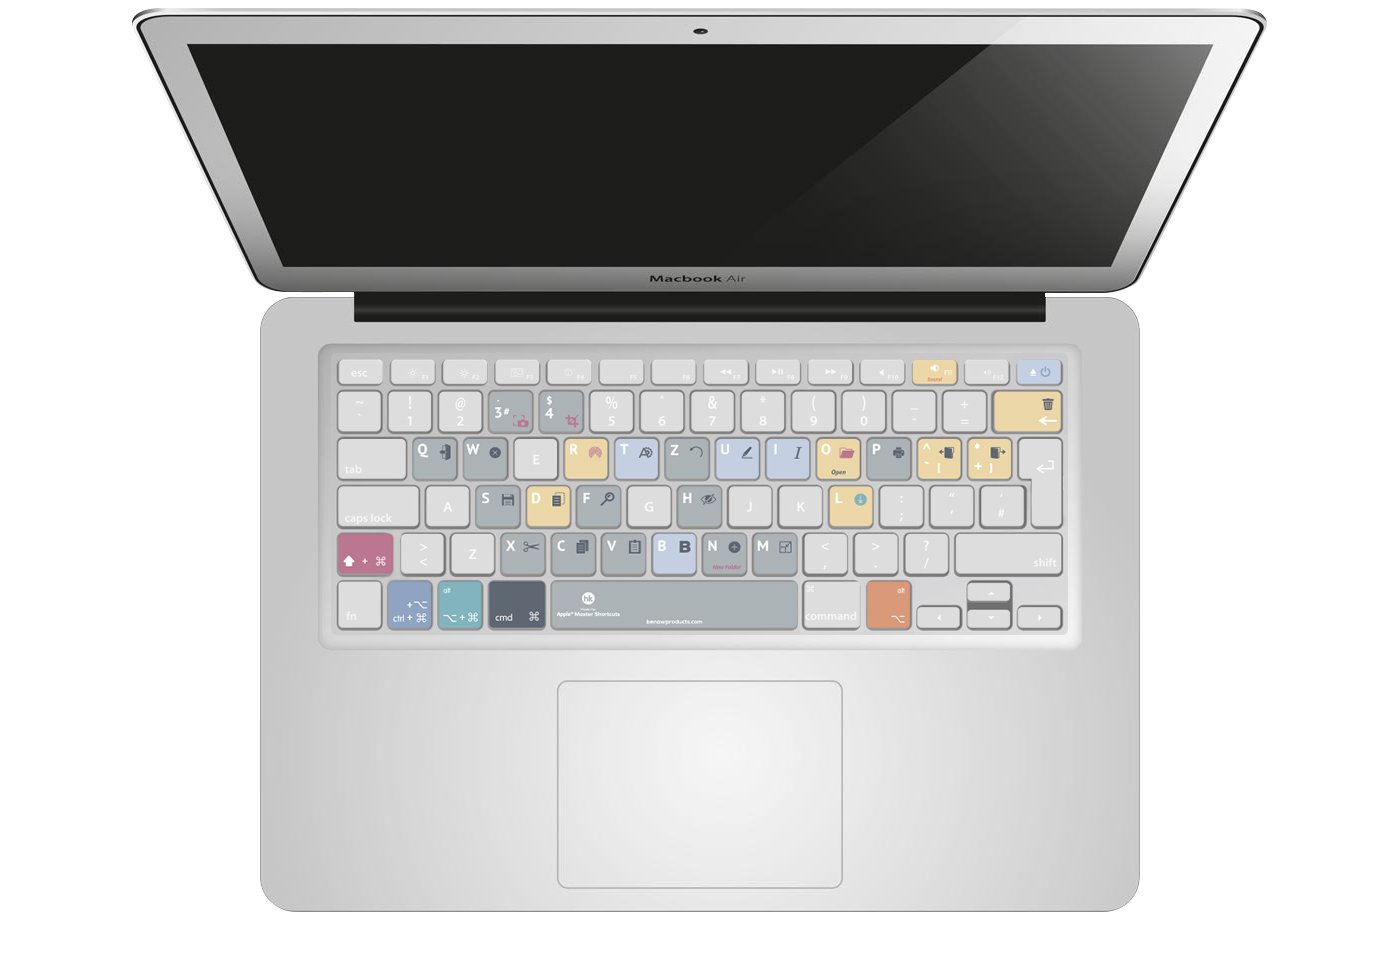 Benaw Kh Os Grm Hotkeys Keyboard Skin Mac Os Shortcuts For Macbook